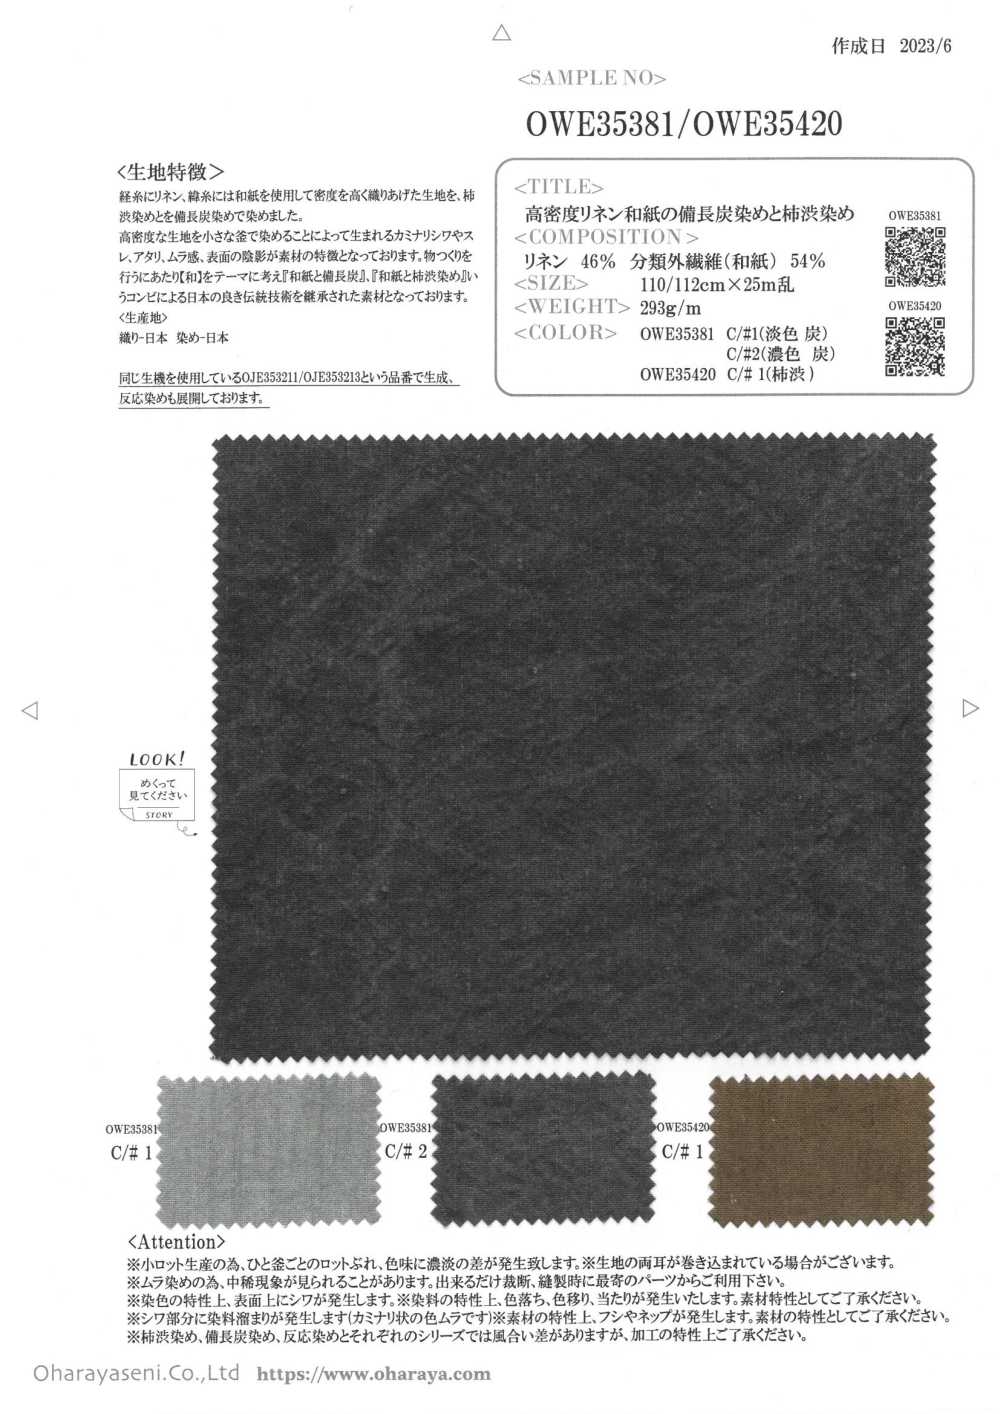 OWE35381 High Density Linen Washi Dyed With Binchotan Charcoal[Textile / Fabric] Oharayaseni